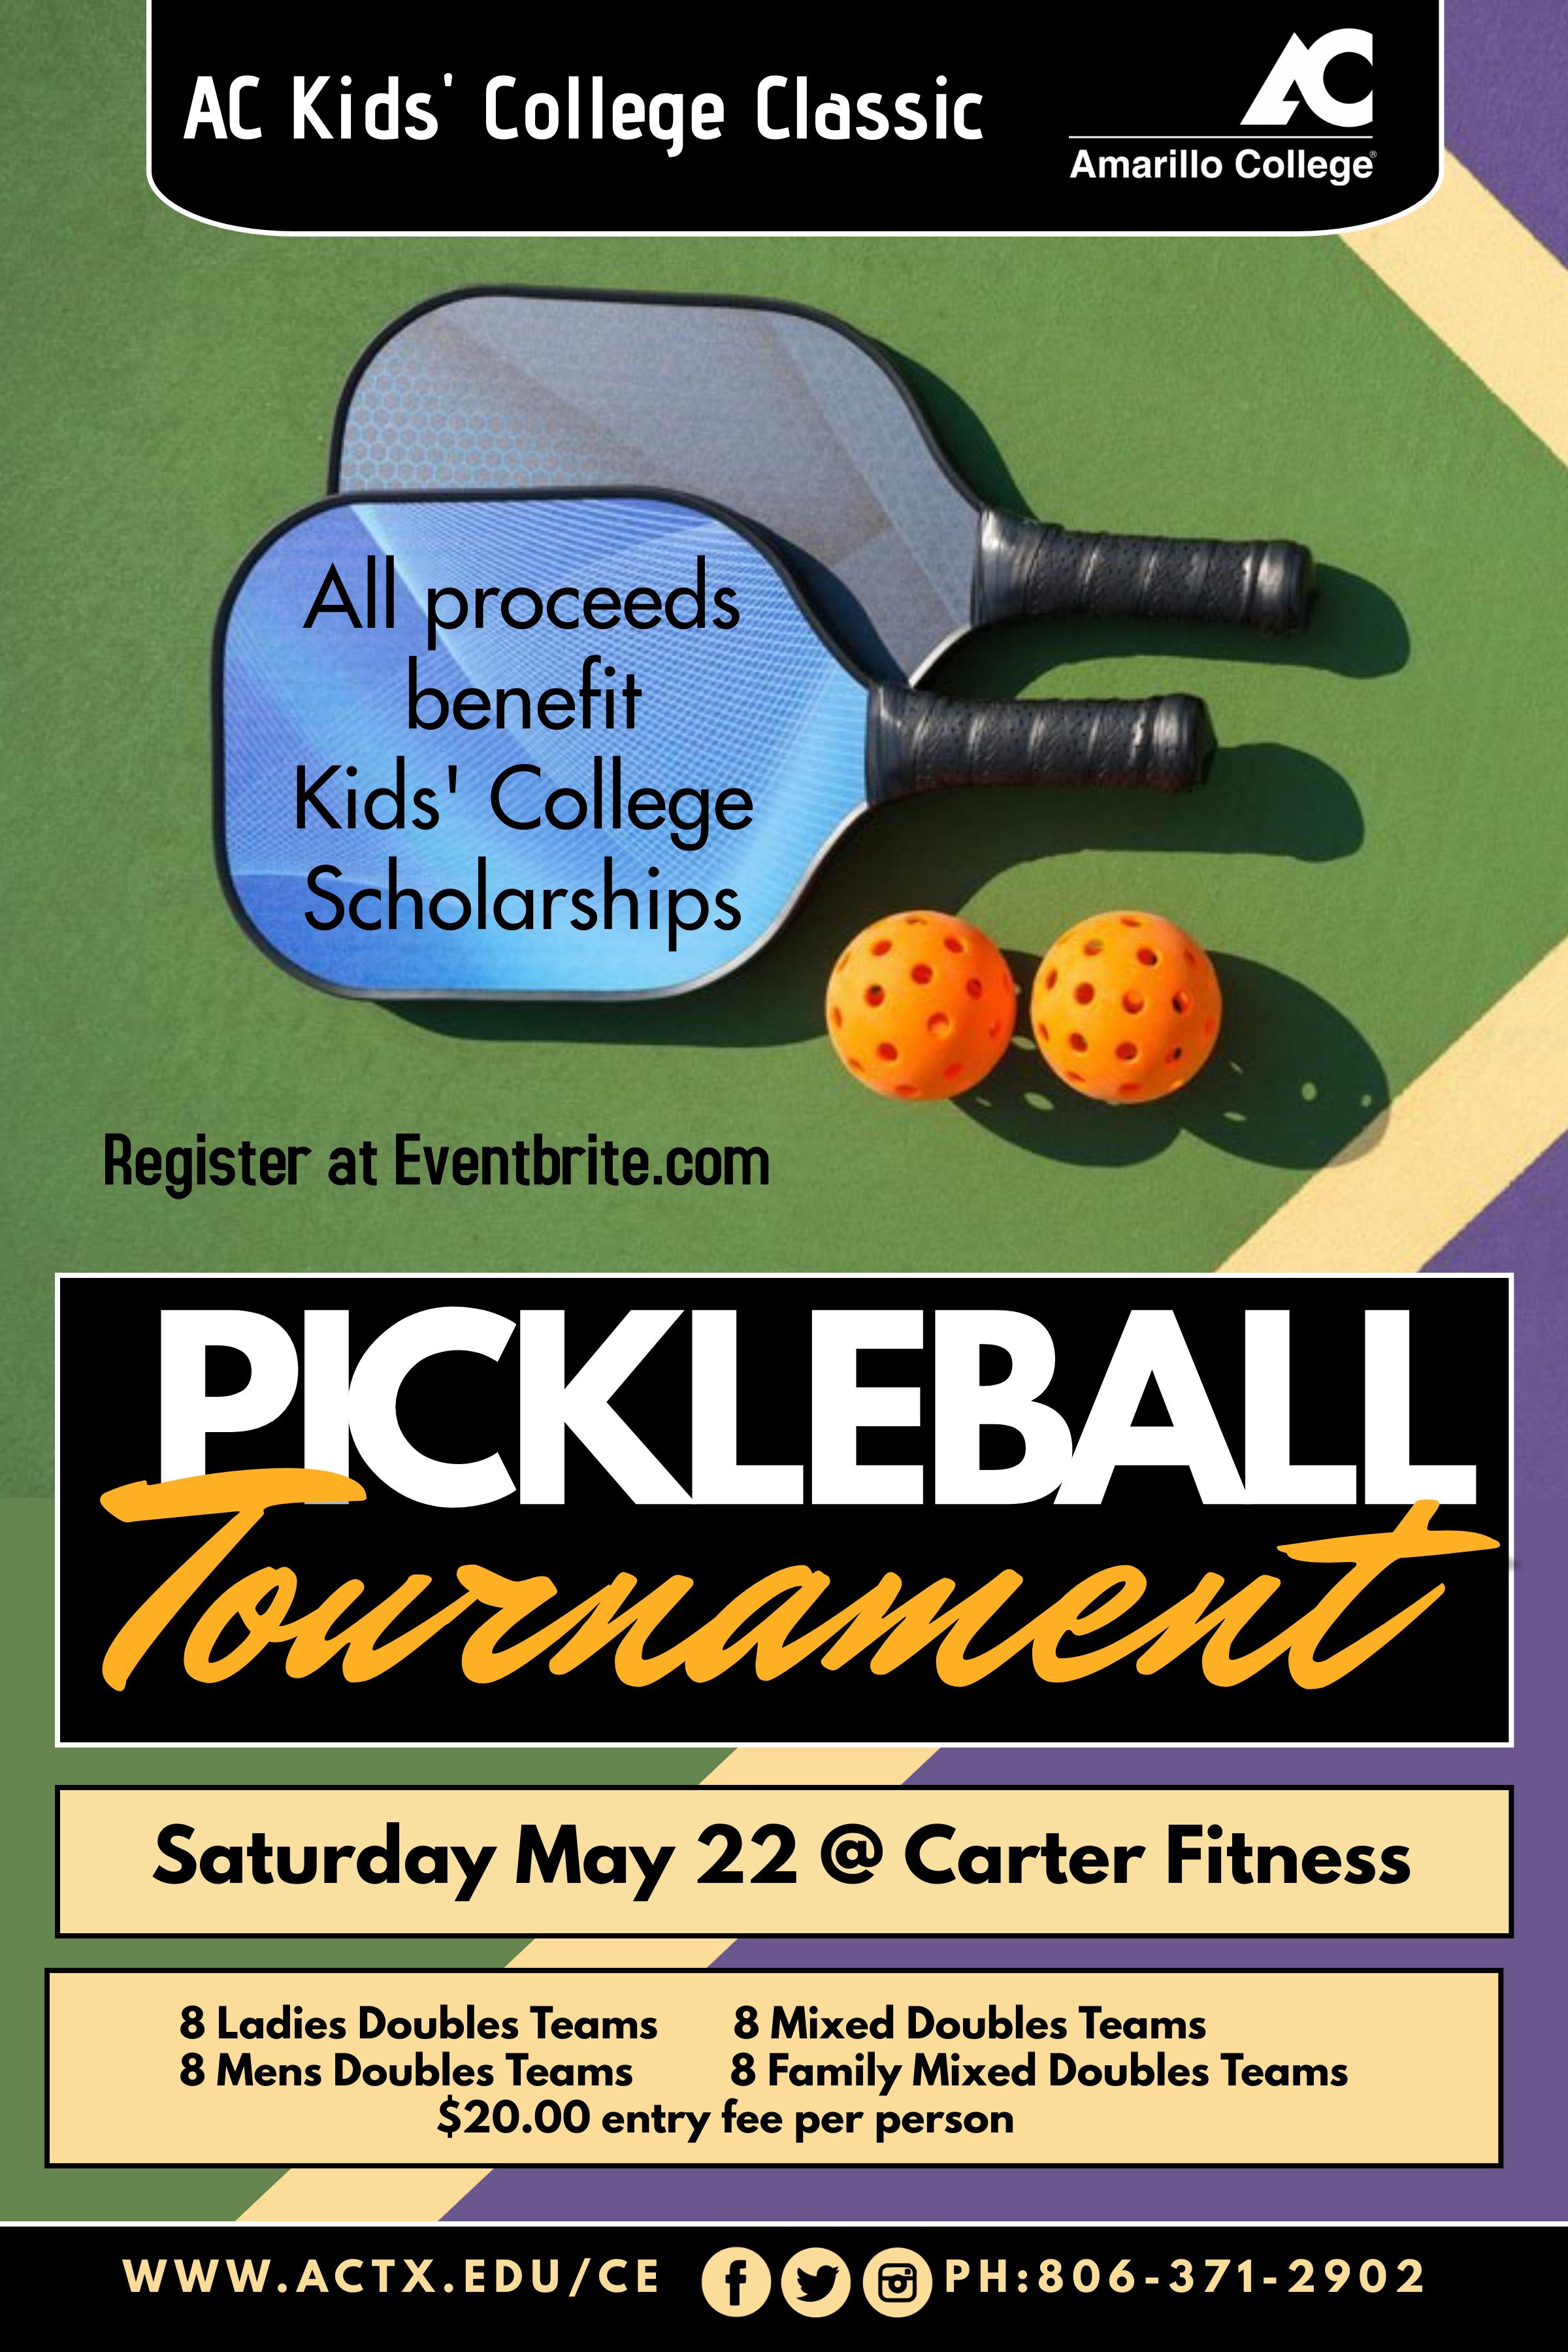 AC Kids' College Classic Pickleball Tournament - 22 MAY 2021